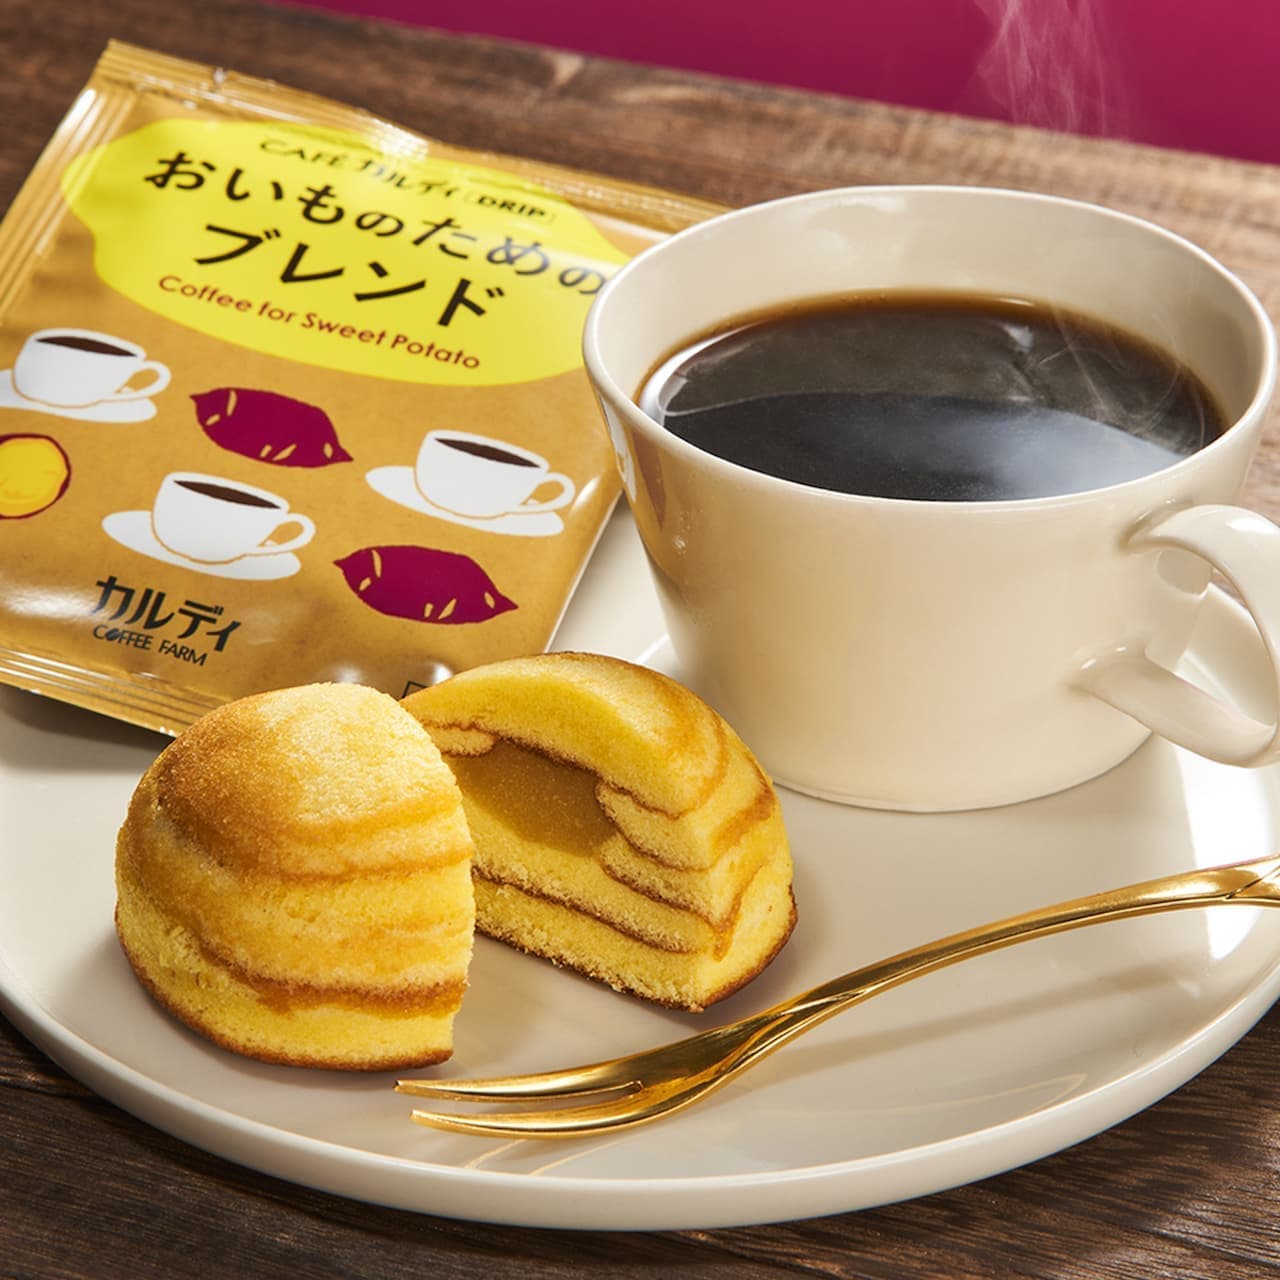 KALDI "Drip Coffee & Sweets Set for Enjoying Oimo